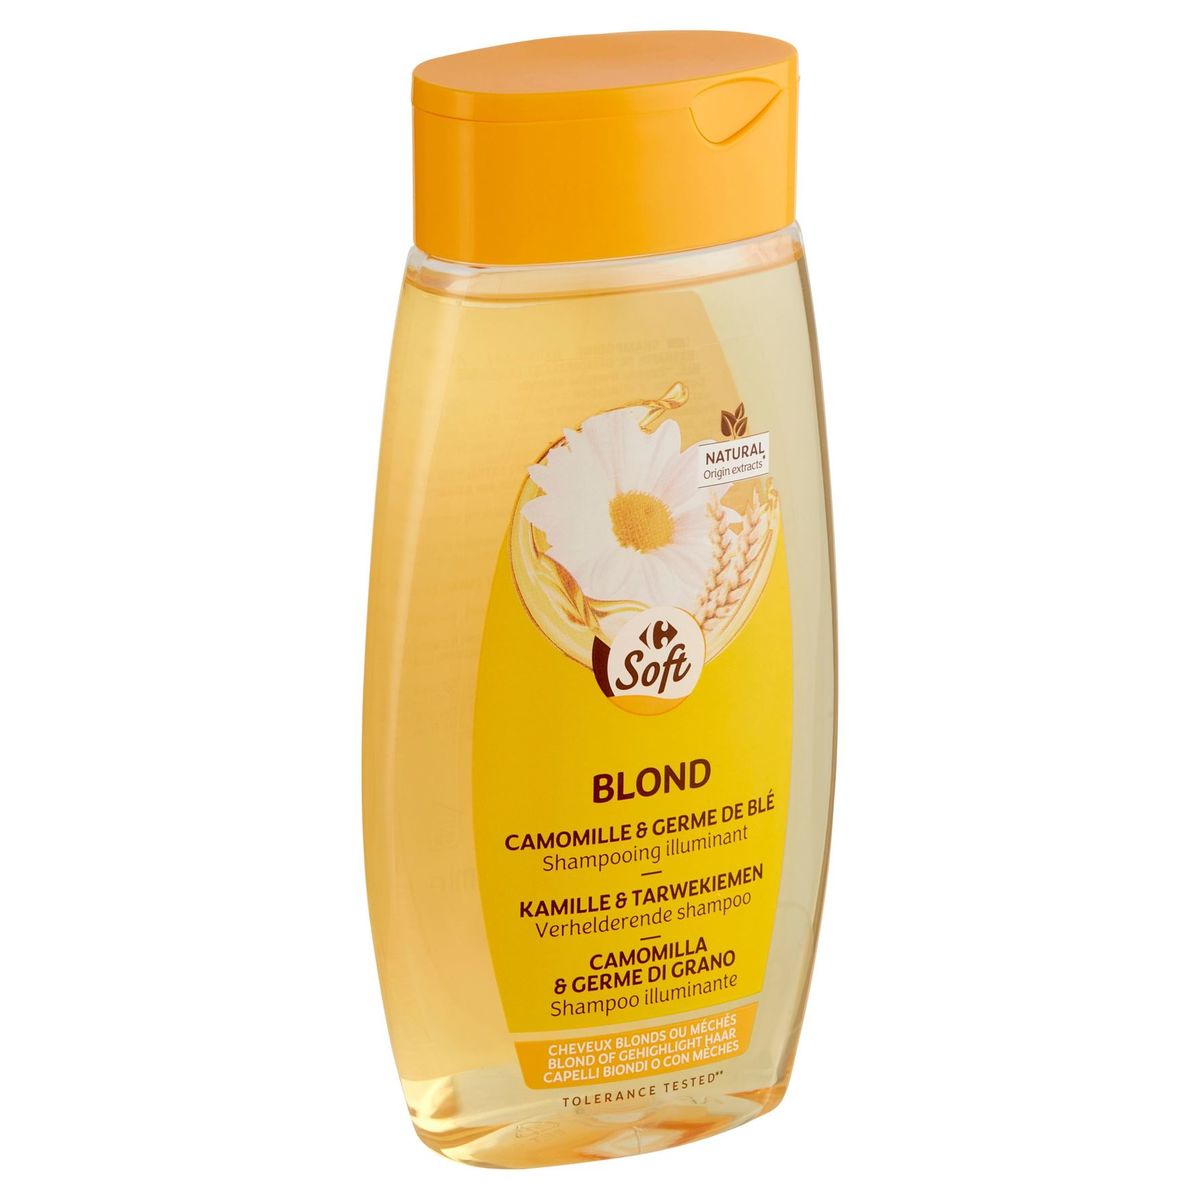 Carrefour Soft Blond Camomille&Germe Blé Shampooing Illuminant 250 ml